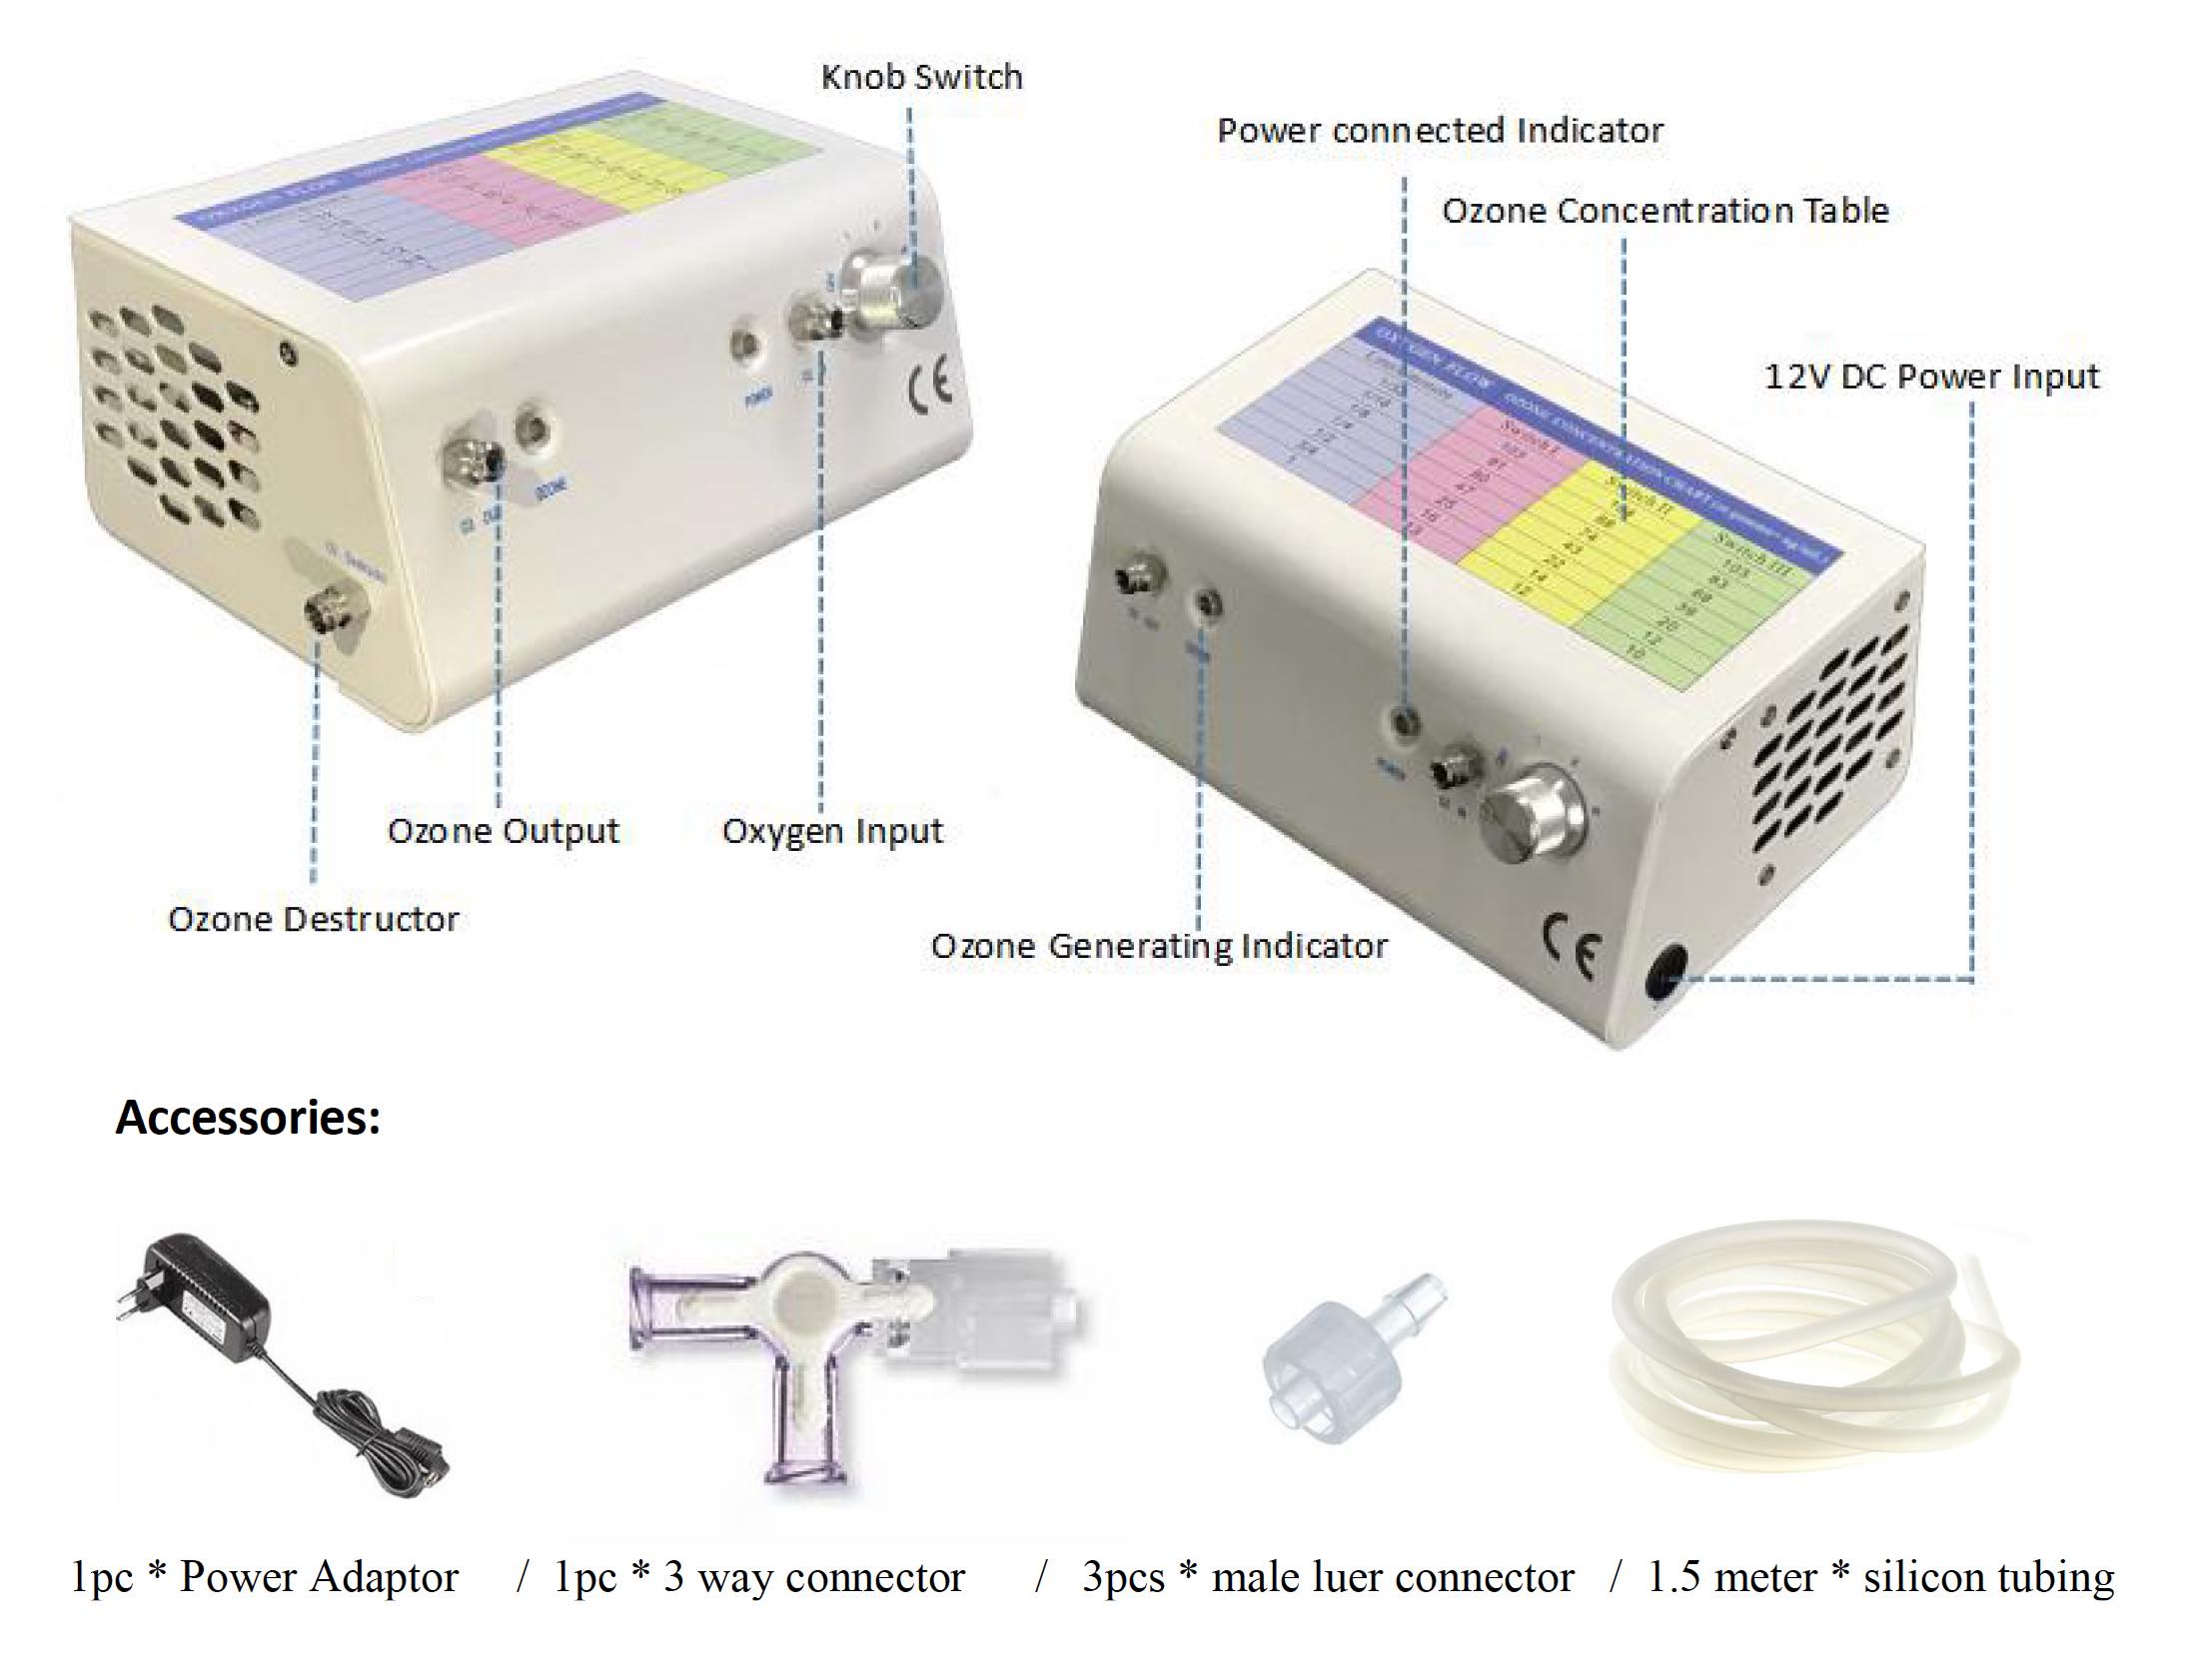 10-104 ug/mL MINI Medical Ozone Therapy Generator Machine with Ozone Destructor MOZ0.2-AD 